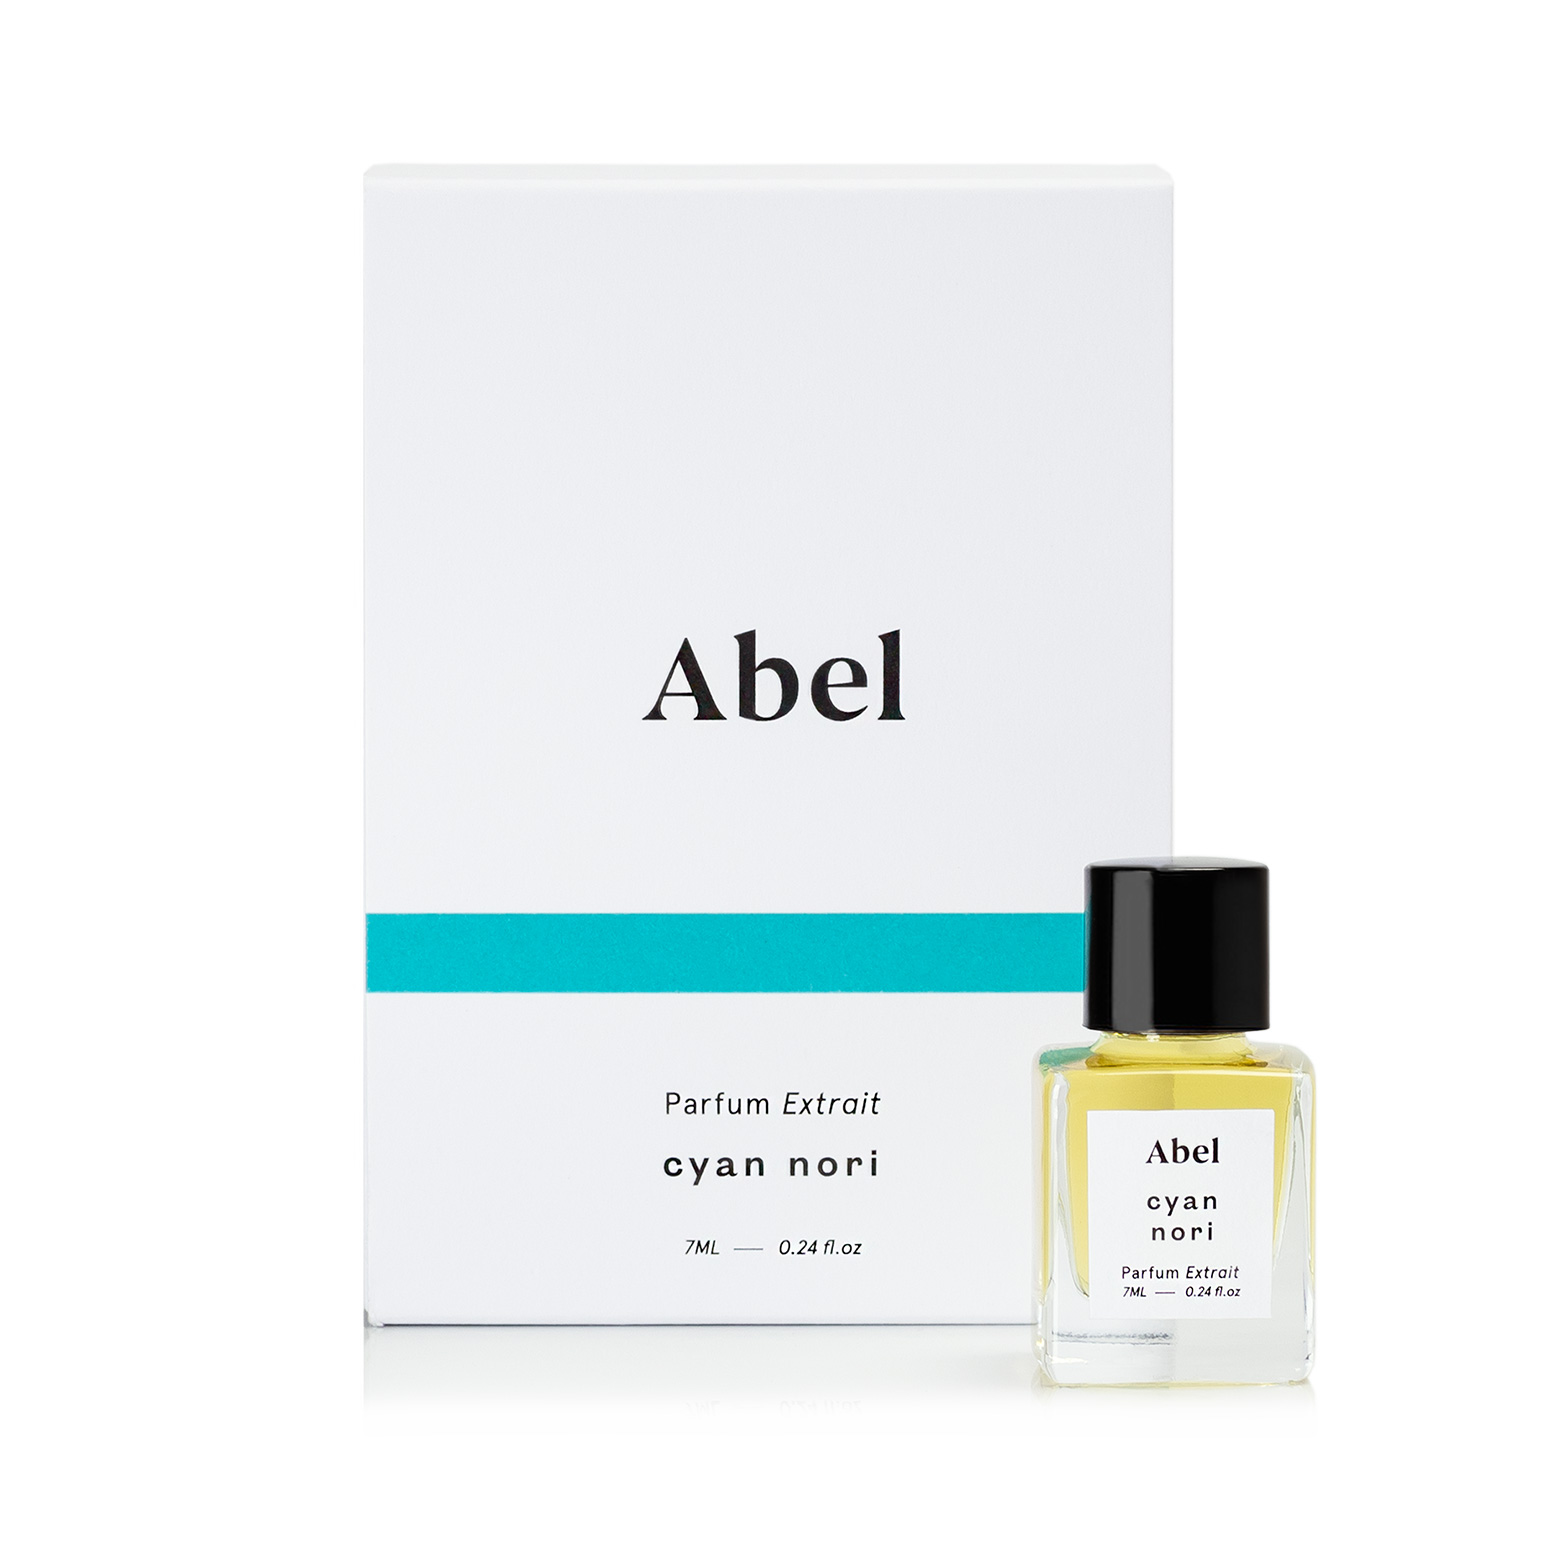 Abel Odor 7ml Cyan Nori Parfum Extrait